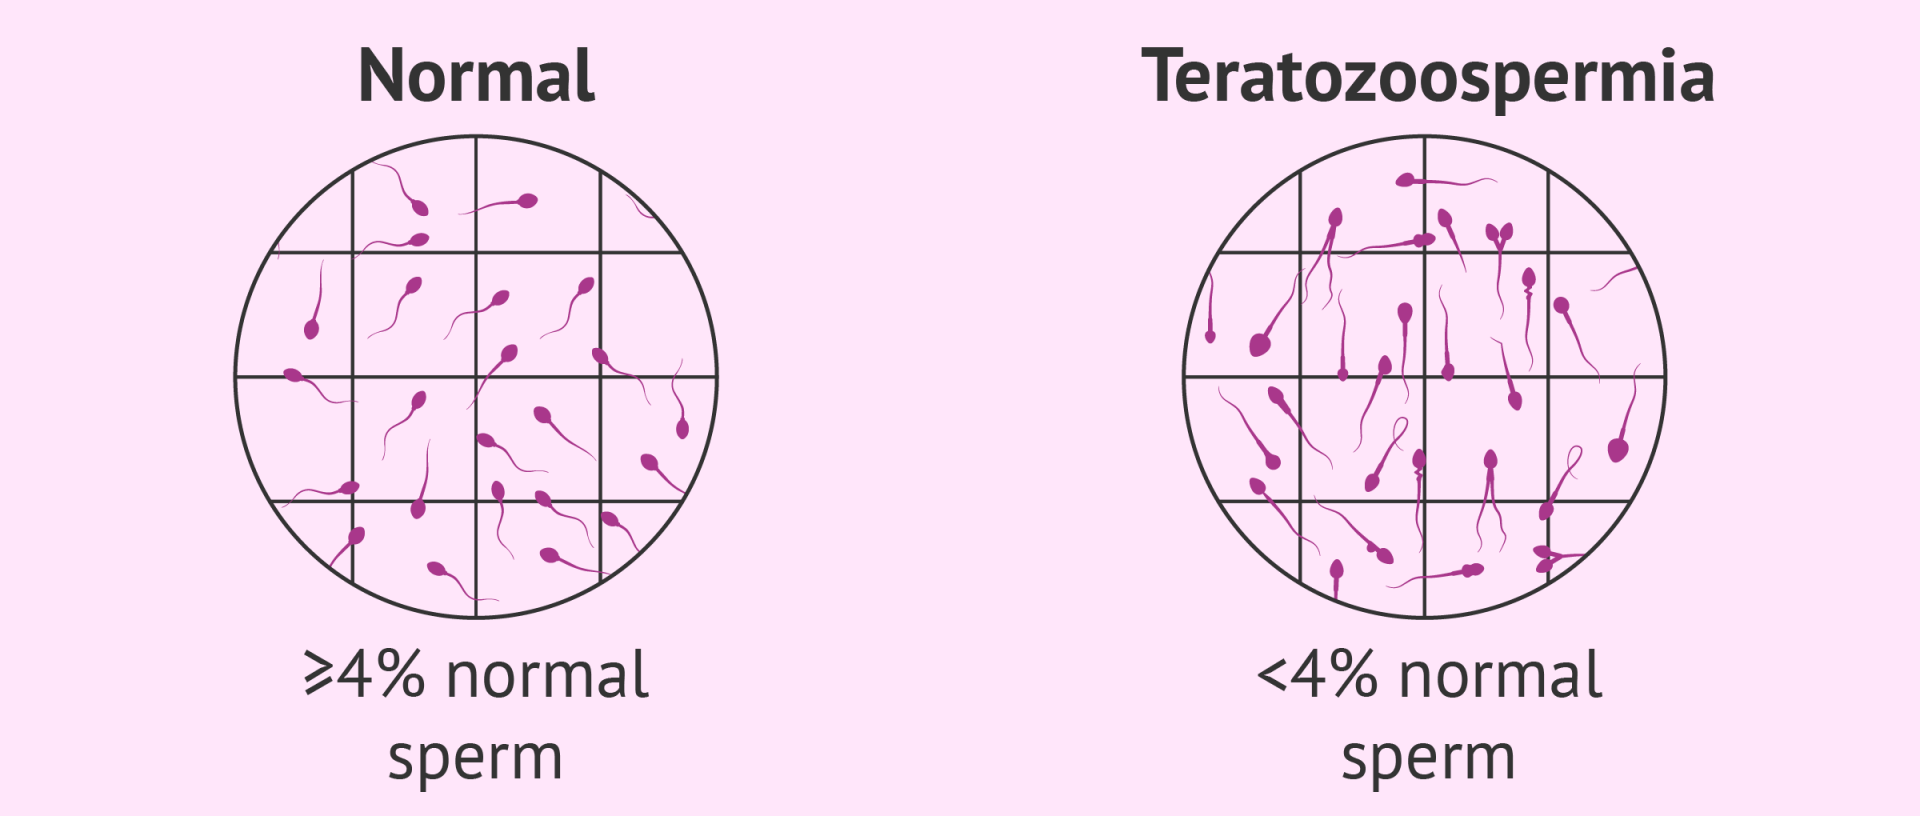 Male sterility due to teratozoospermia 1